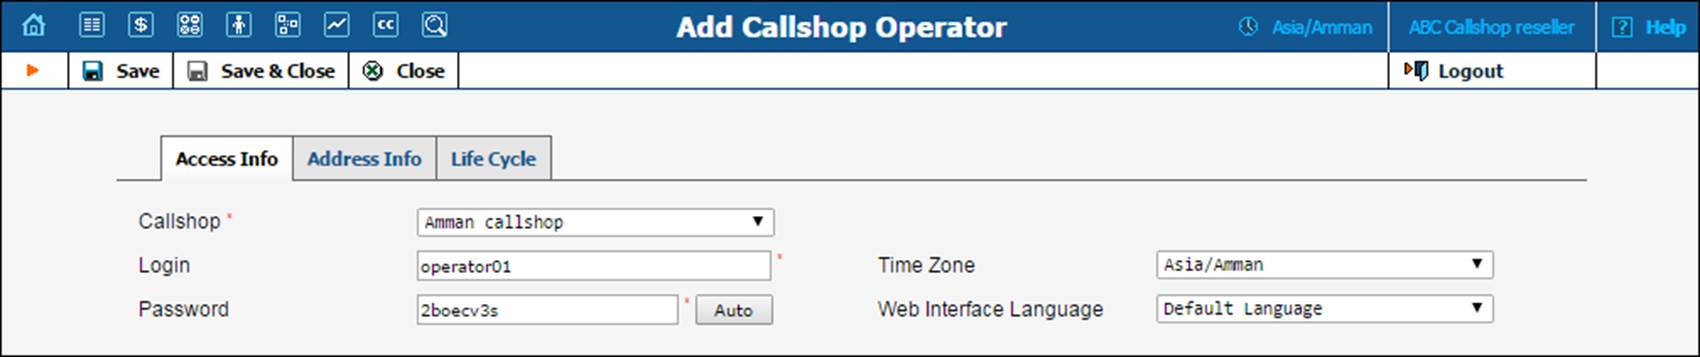 Create a callshop operator 